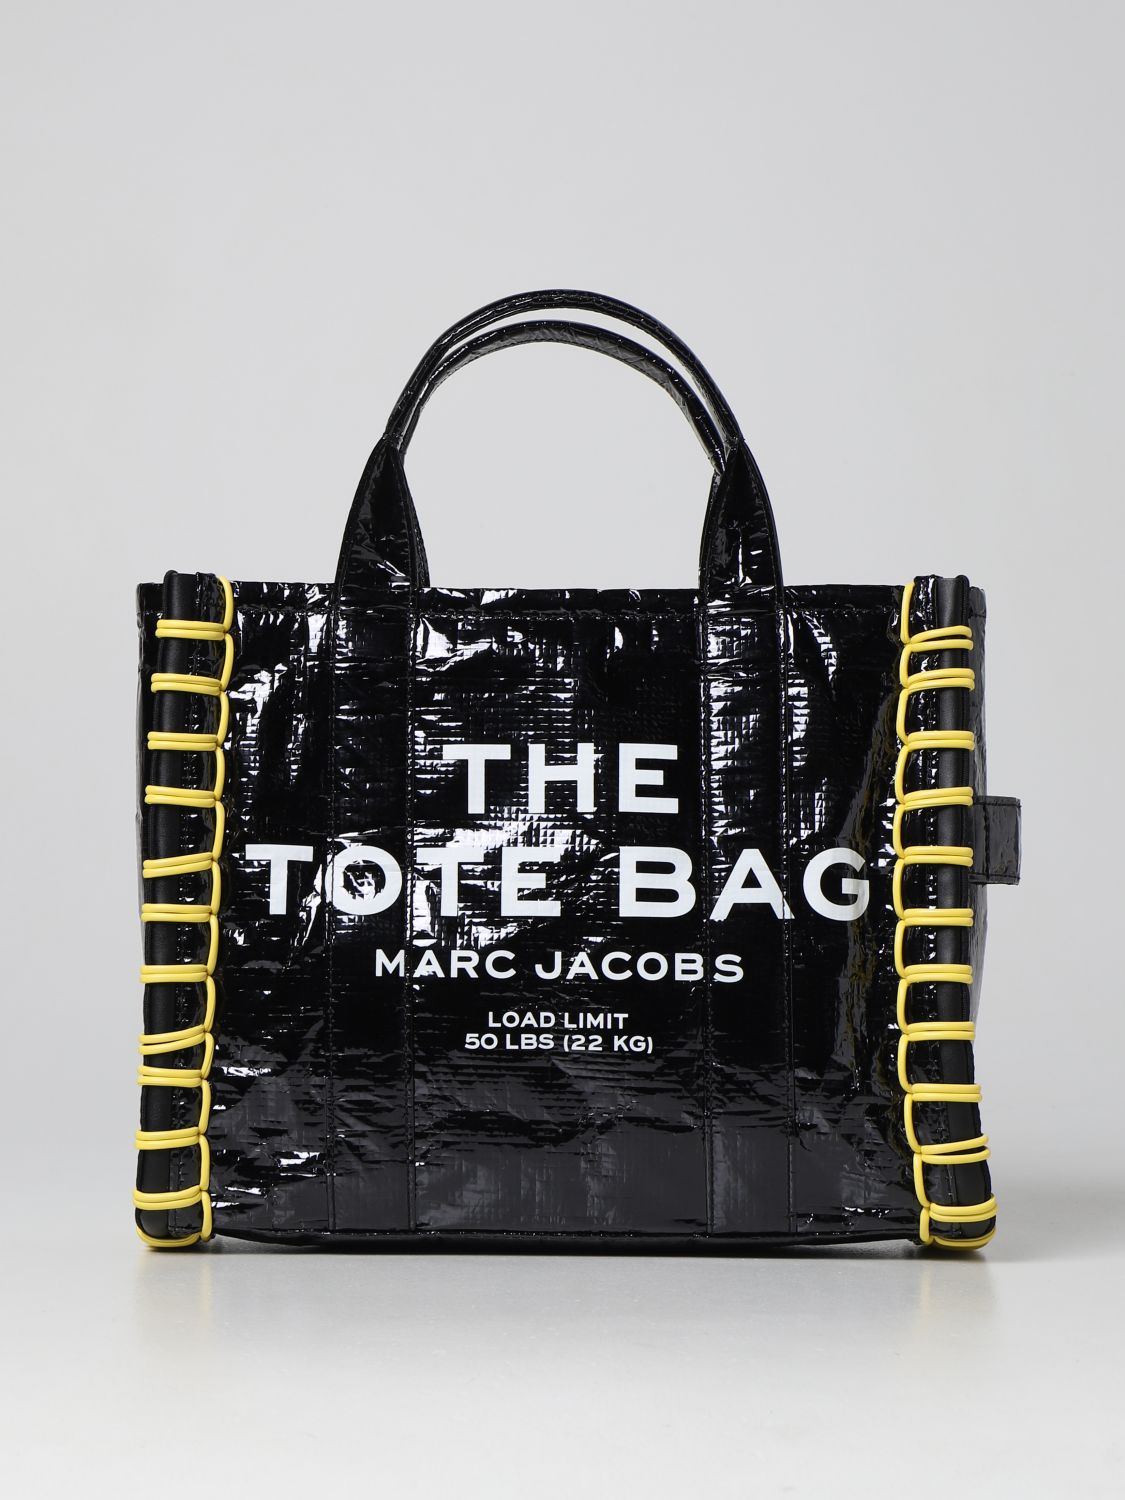 MARC JACOBS: The Tarp Tote Bag - Black | Marc Jacobs handbag ...